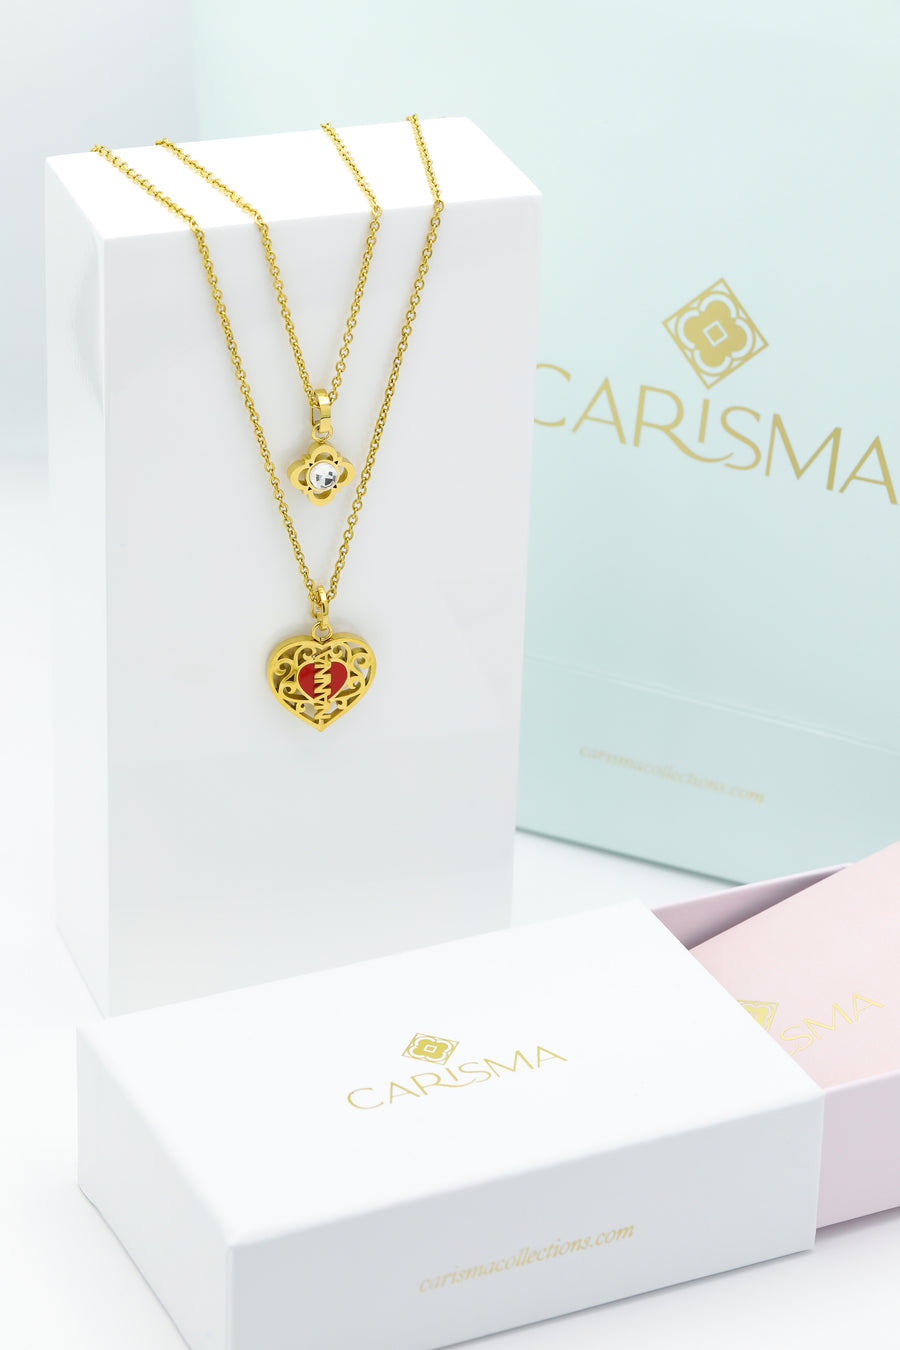 "Nanna" Hollow Heart Pendant & Carisma Logo Birthstone Pendant Gift Set